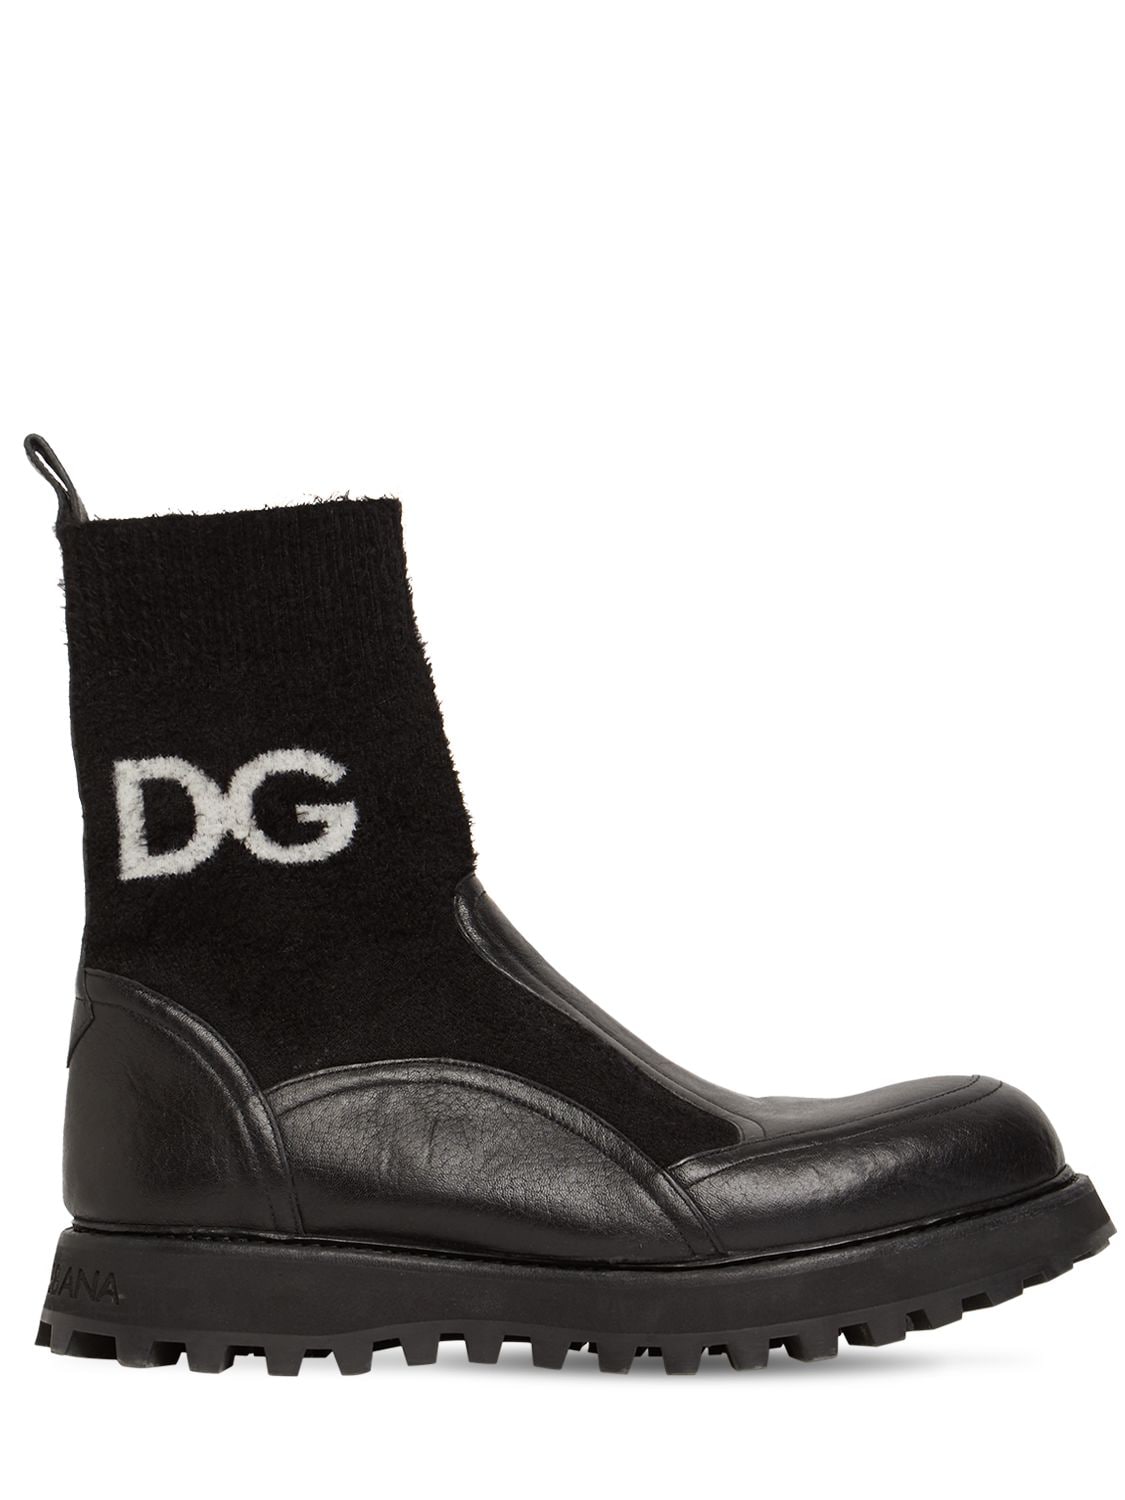 Dg Leather & Knit Boots